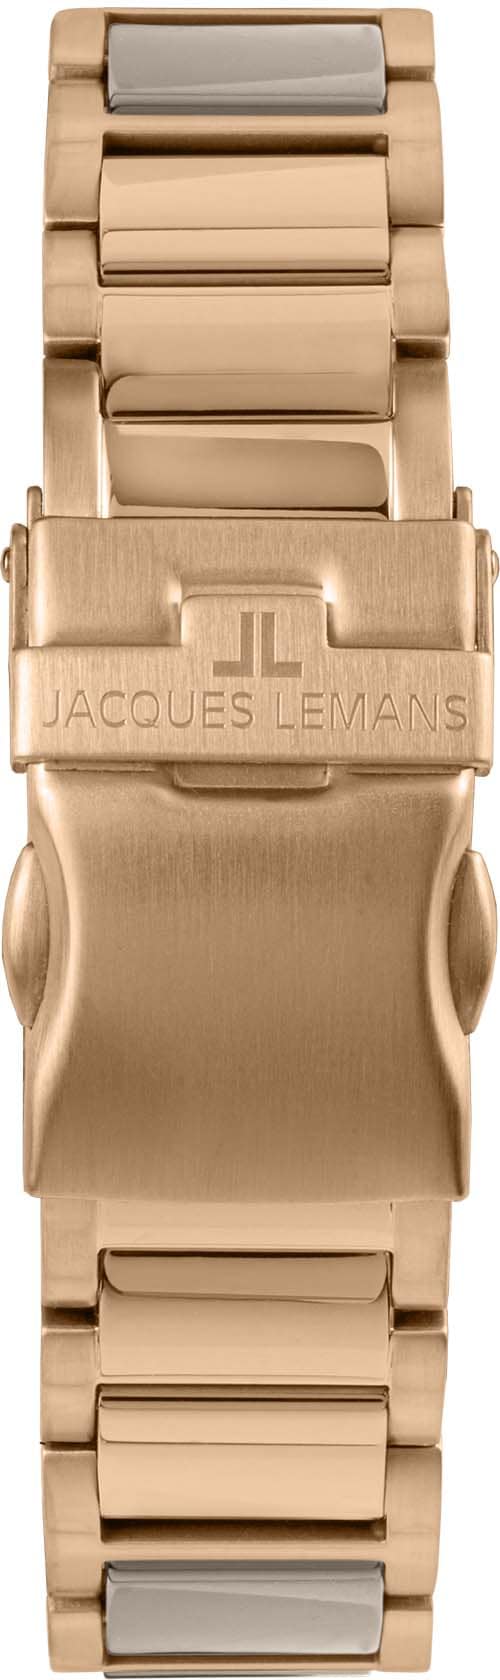 Jacques Lemans Keramikuhr »Liverpool, 42-12M«, Quarzuhr, Armbanduhr, Damenuhr, Datum, Leuchtzeiger